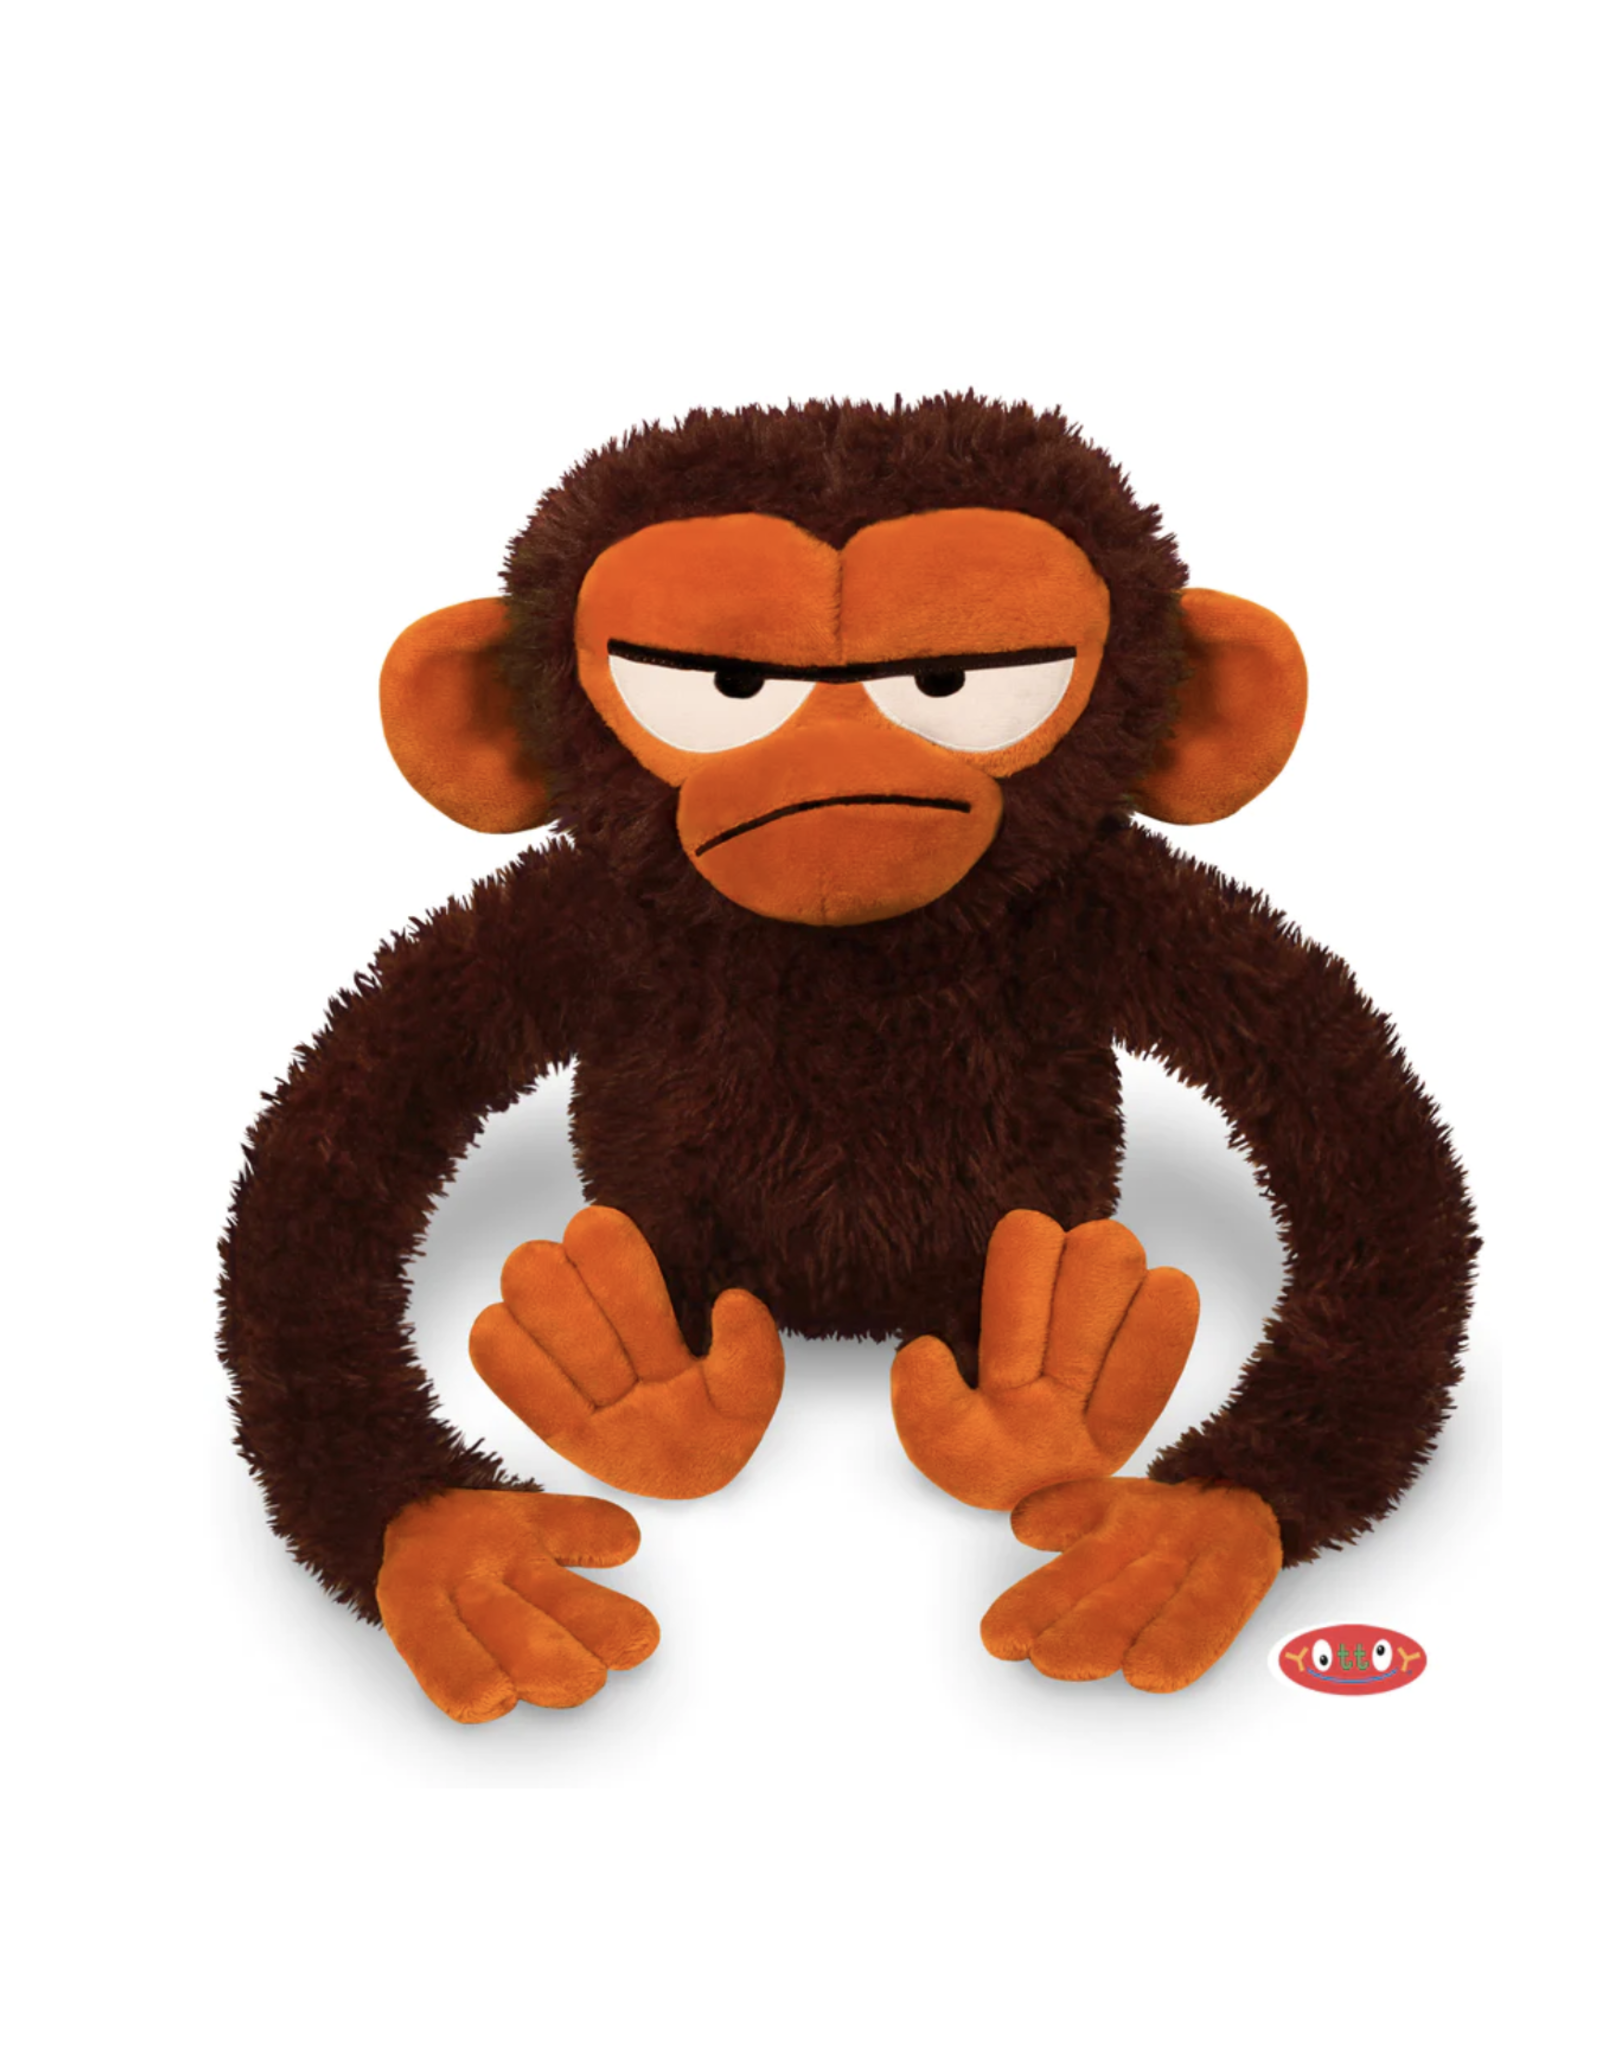 Grumpy Monkey Plush Toy